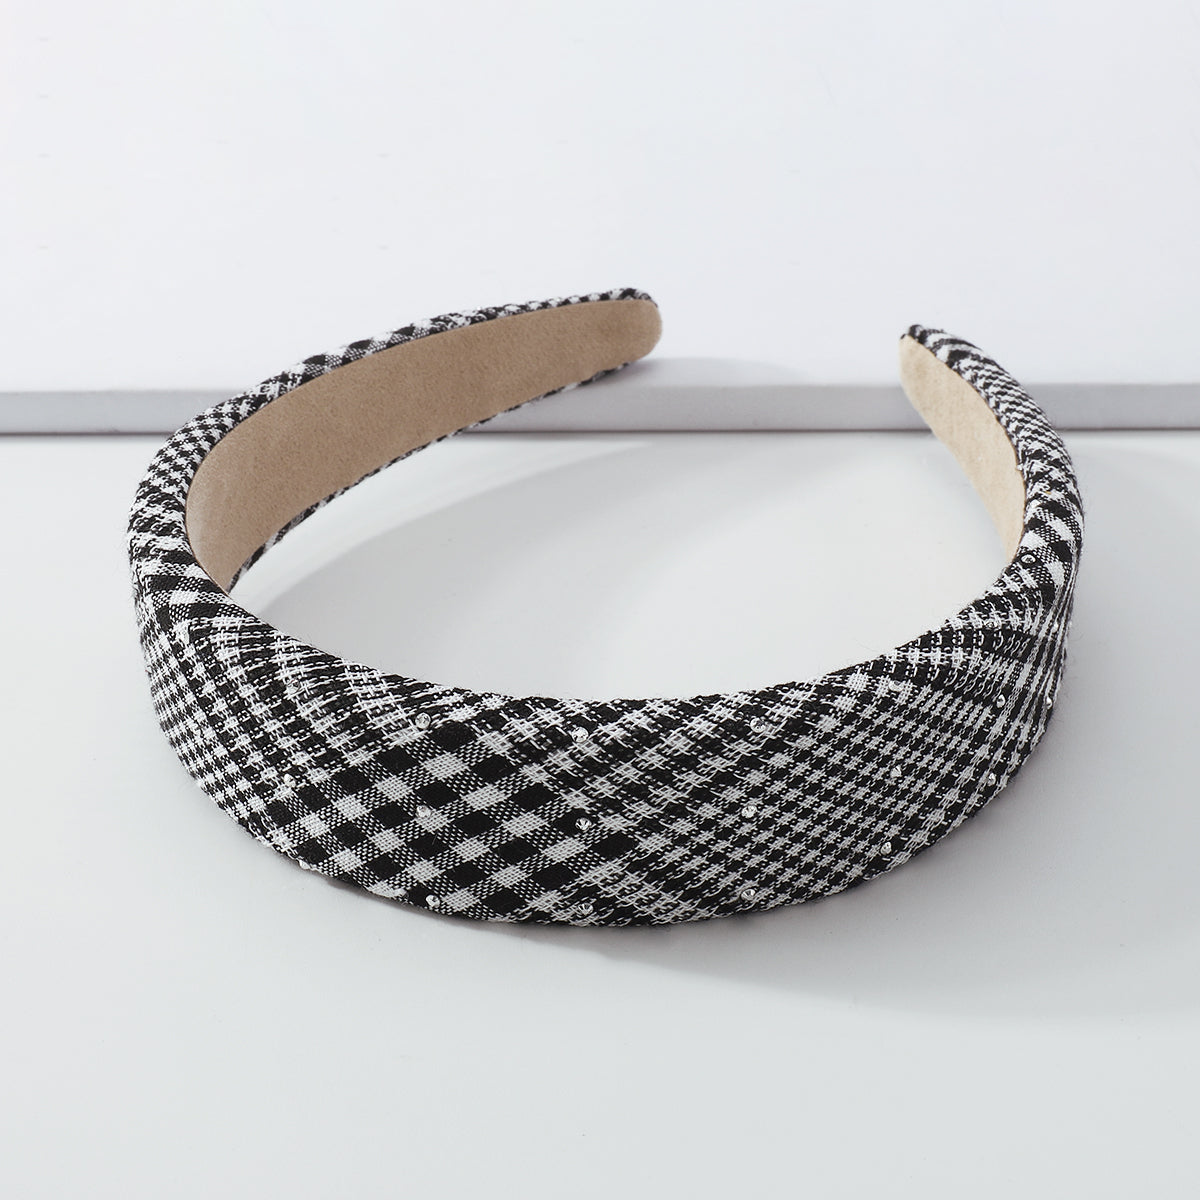 Checker Pattern with Tiny Crystal Wide Headband medyjewelry